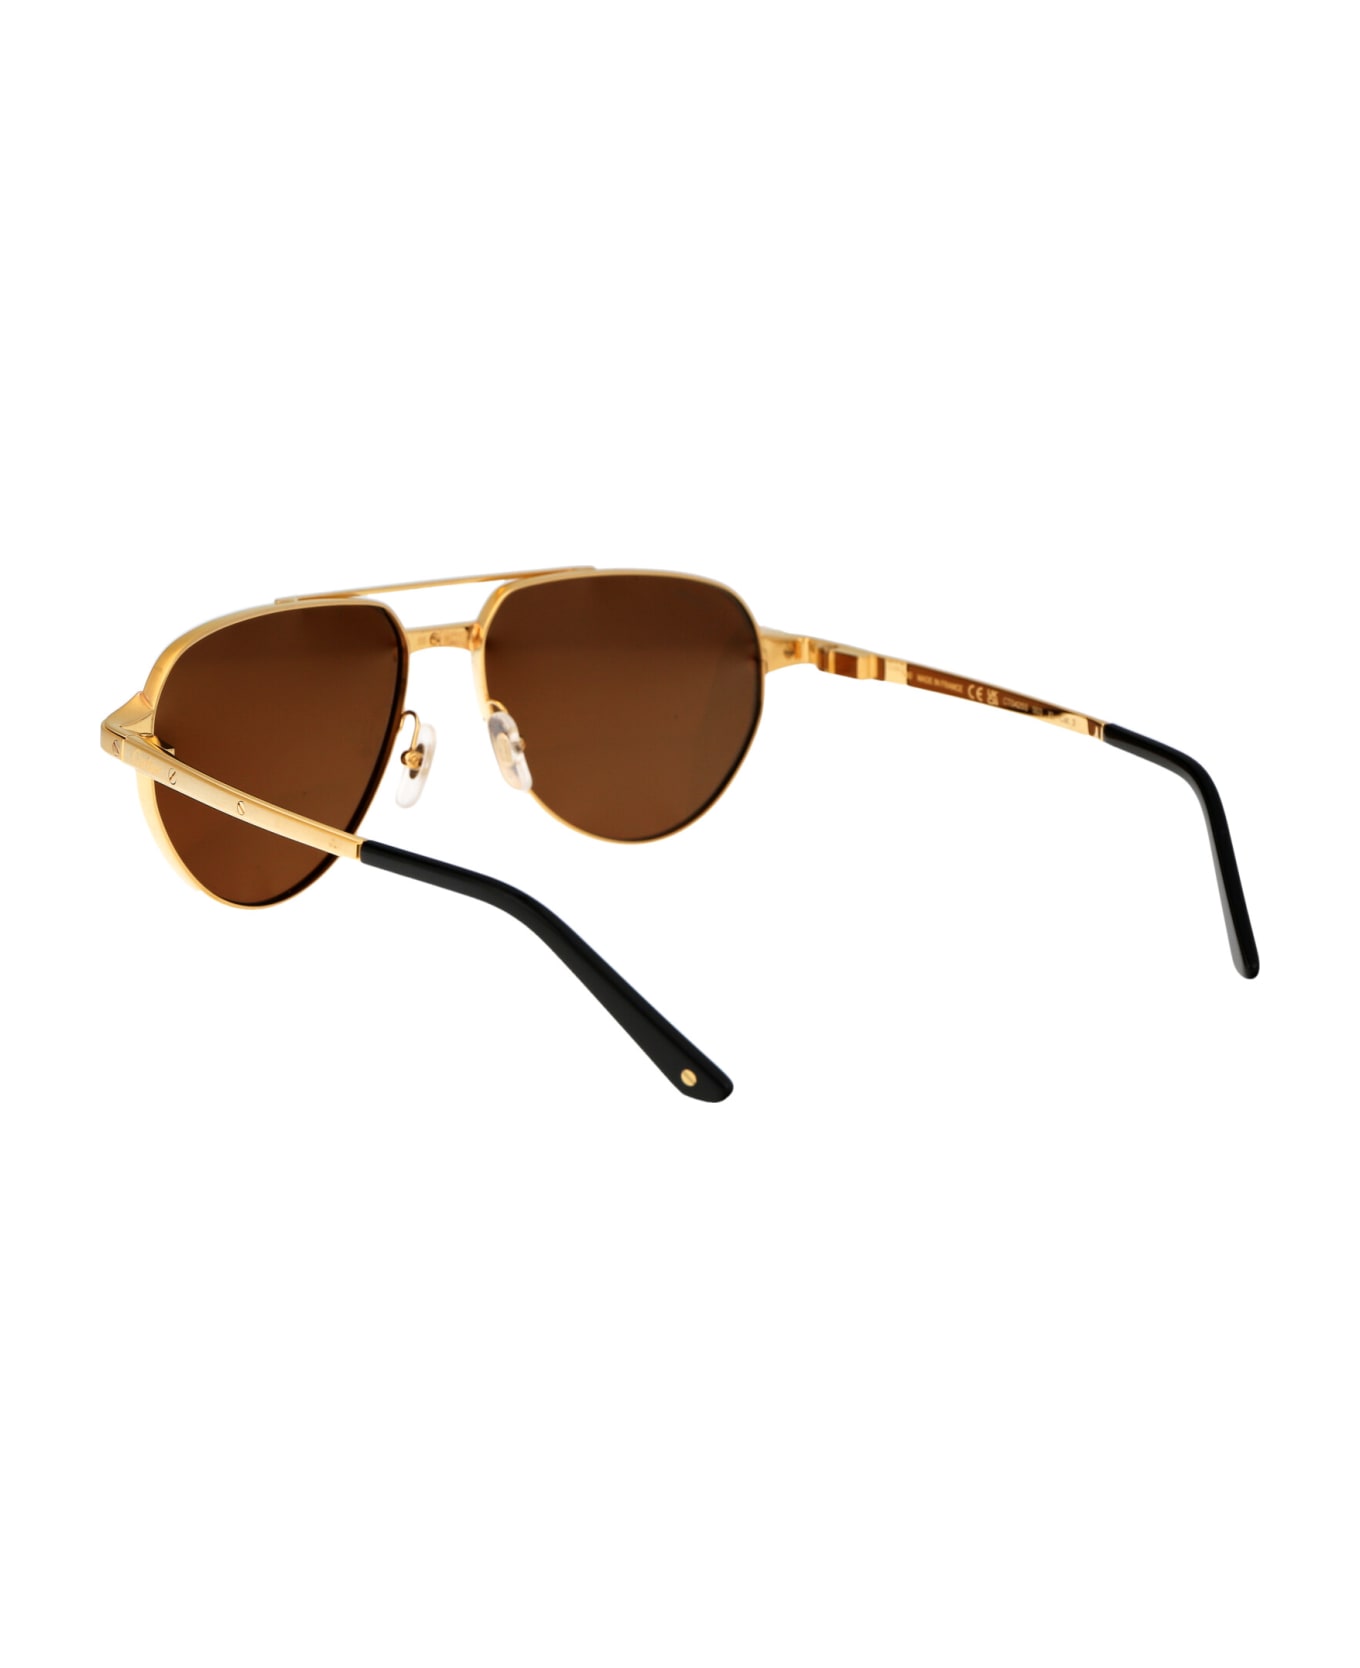 Cartier Eyewear Ct0425s Sunglasses - 003 GOLD GOLD BROWN サングラス